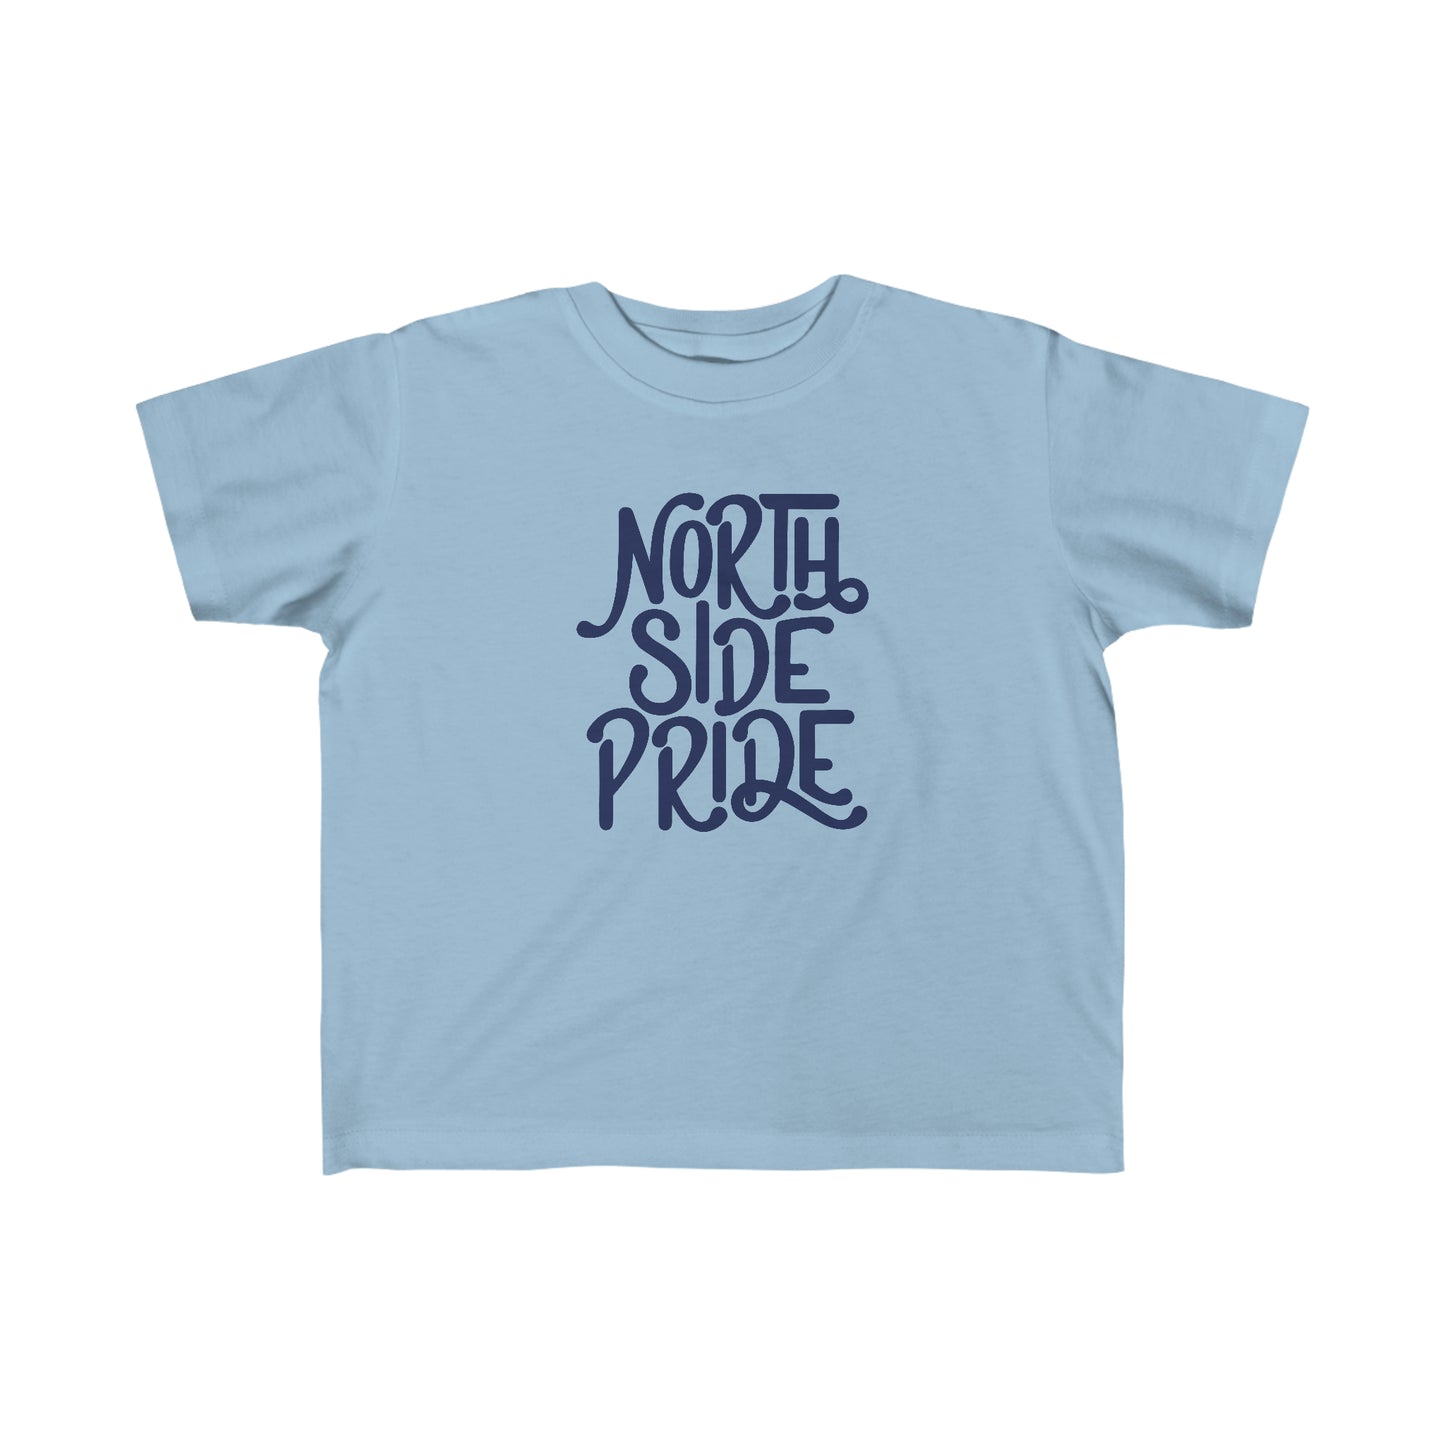 North Side Pride Toddler Tee. Light Blue.